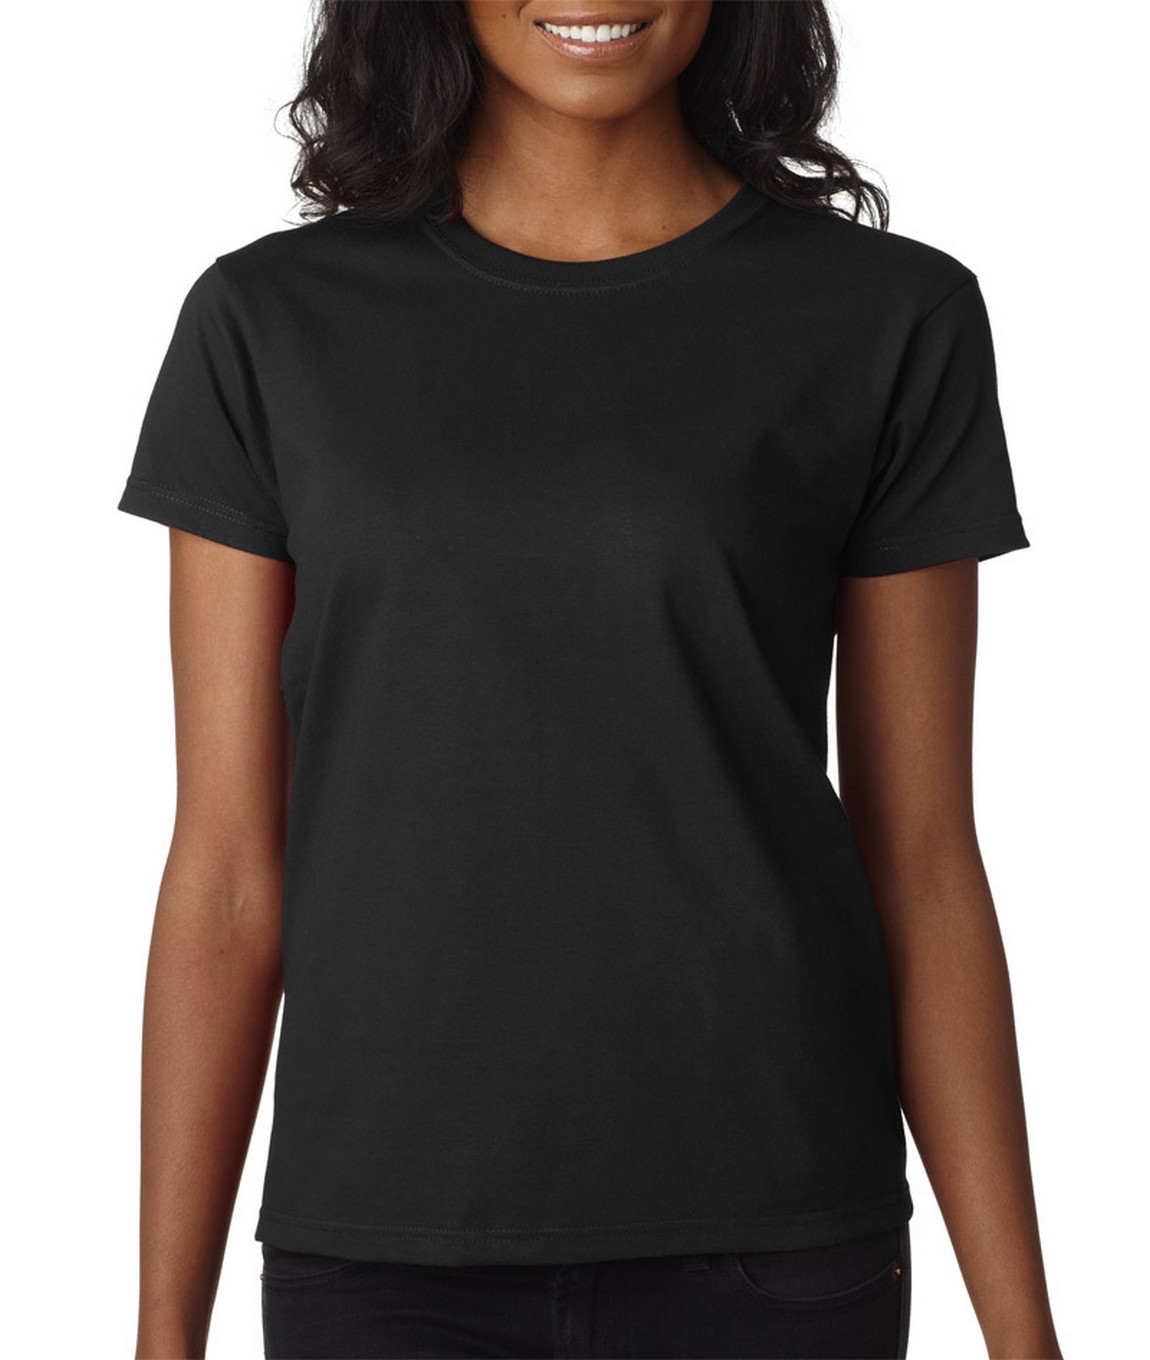 Download Blank Women's Black T-Shirt - RNK Shops